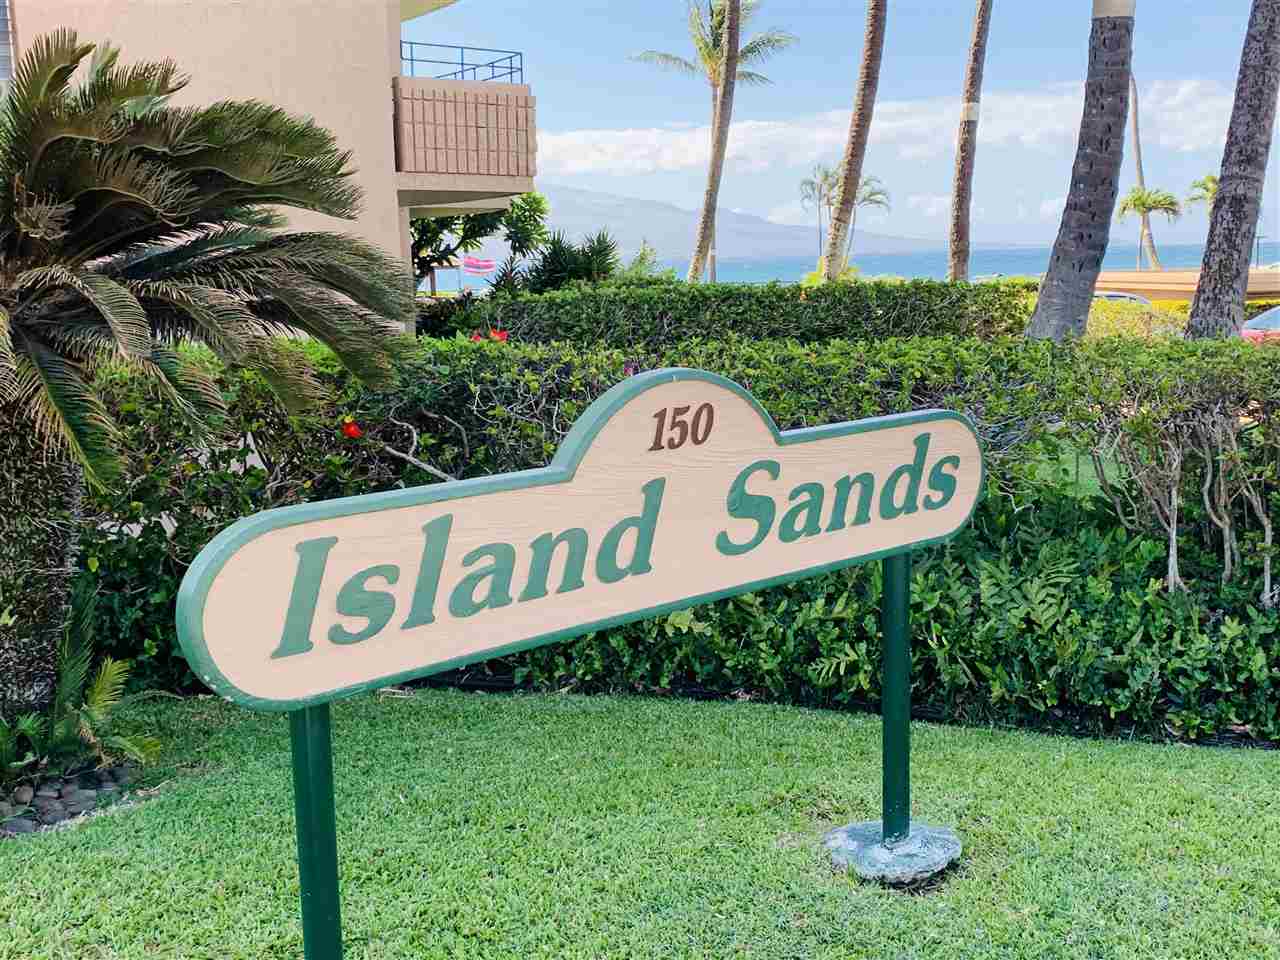 Island Sands condo # 414, Wailuku, Hawaii - photo 3 of 27